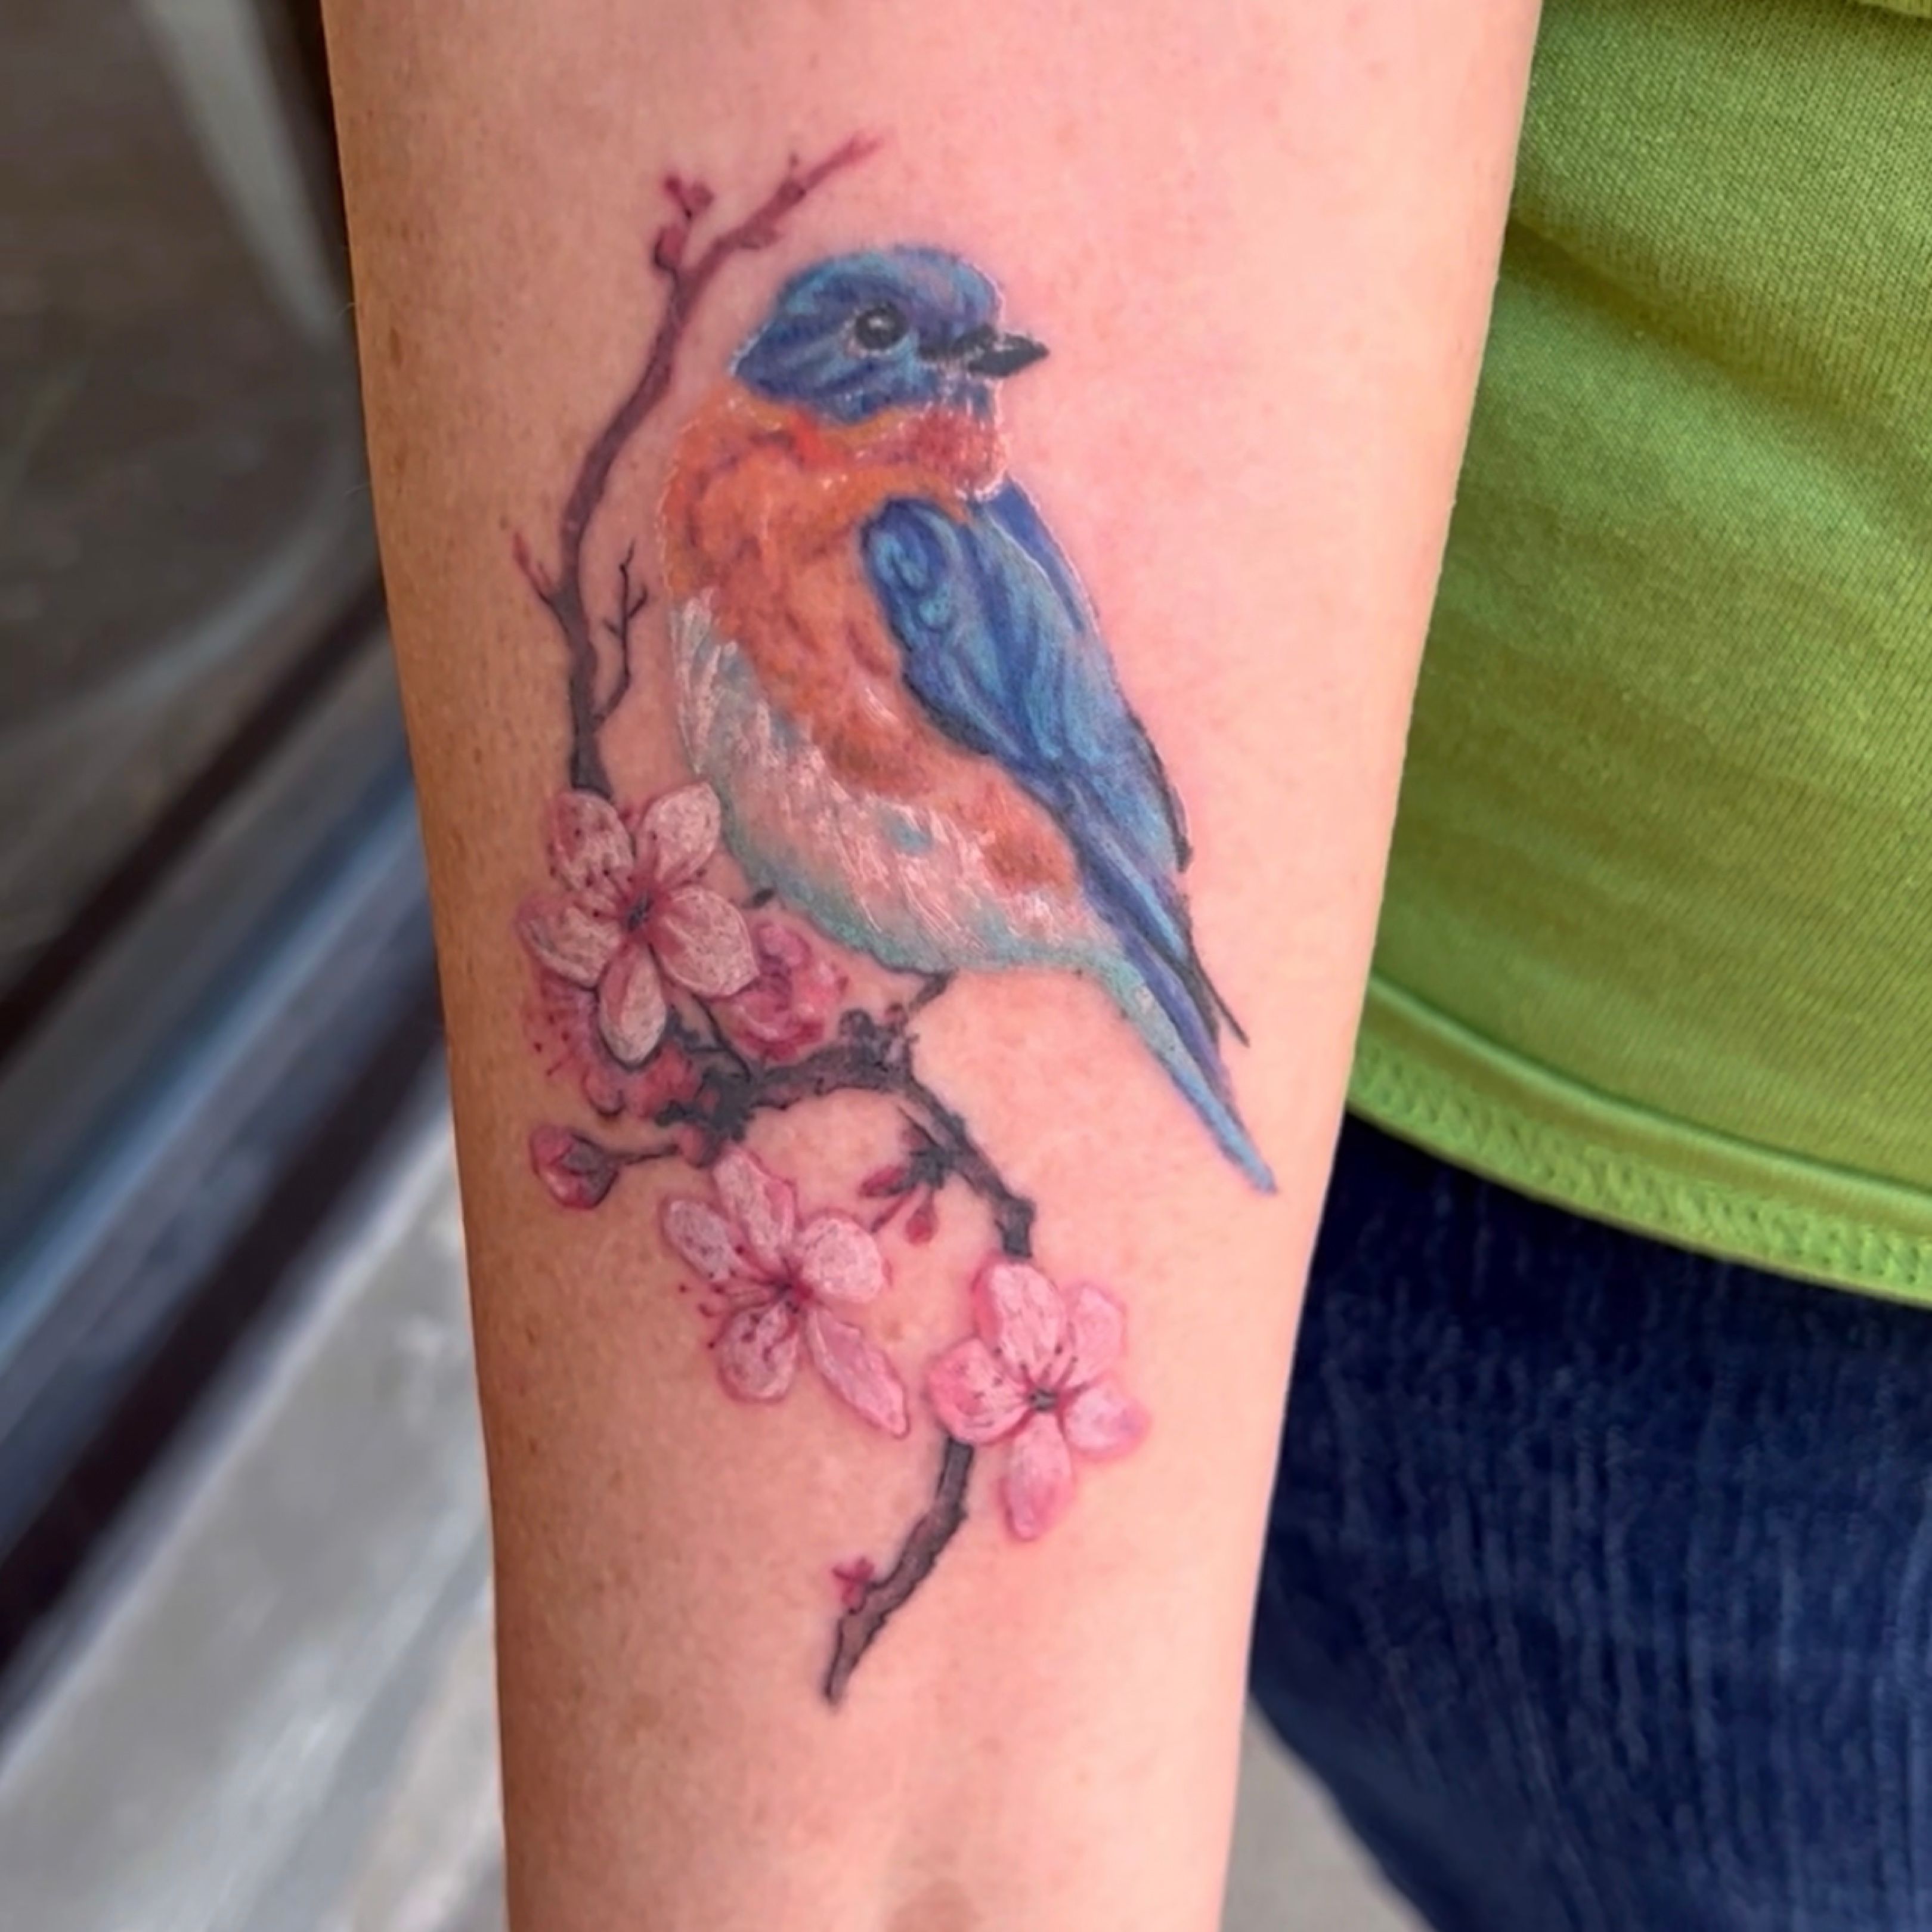 Kingfisher bird tattoo by joshing88 on DeviantArt